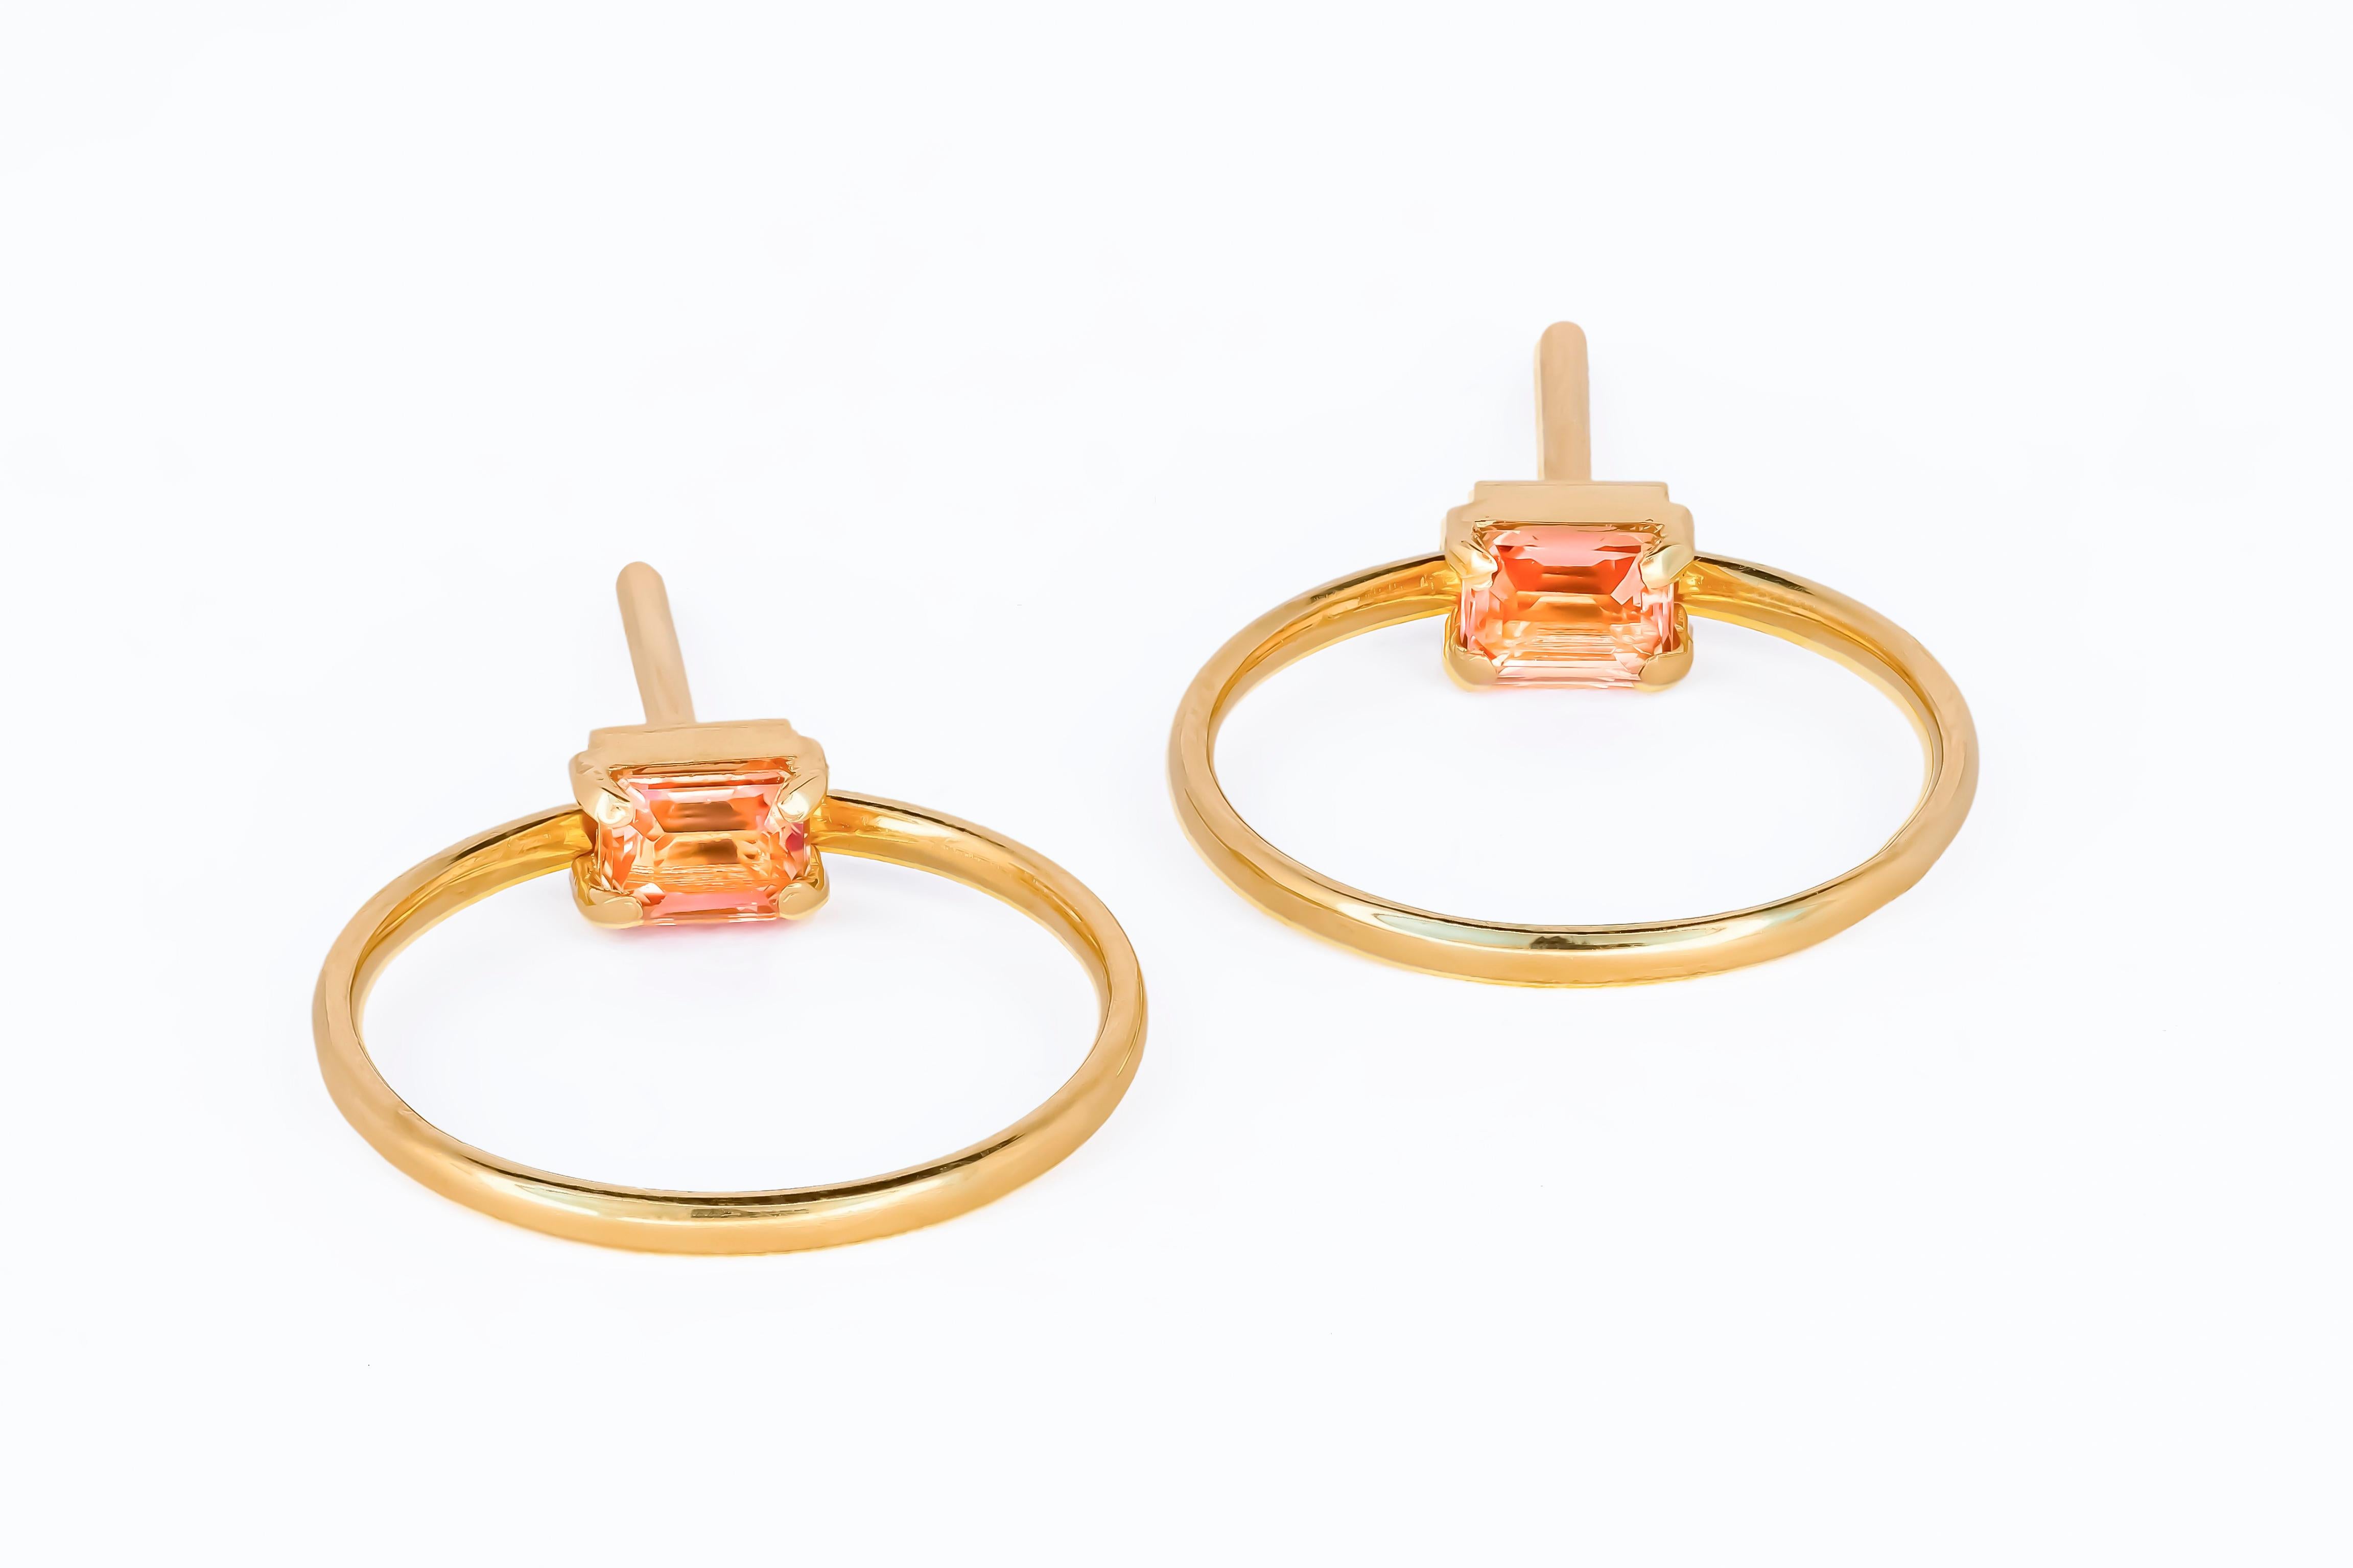 14 karat gold earrings studs with genuine sapphires. September birthstone.
Metal: 14 karat gold
Weight: 2.1 g.
Size: 16.5 x 16.5 mm.
Set with genuine sapphires: weight - 0.20 ct x 2 = 0.40 ct total.
Peach-pink color, baguette cut, clarity good -